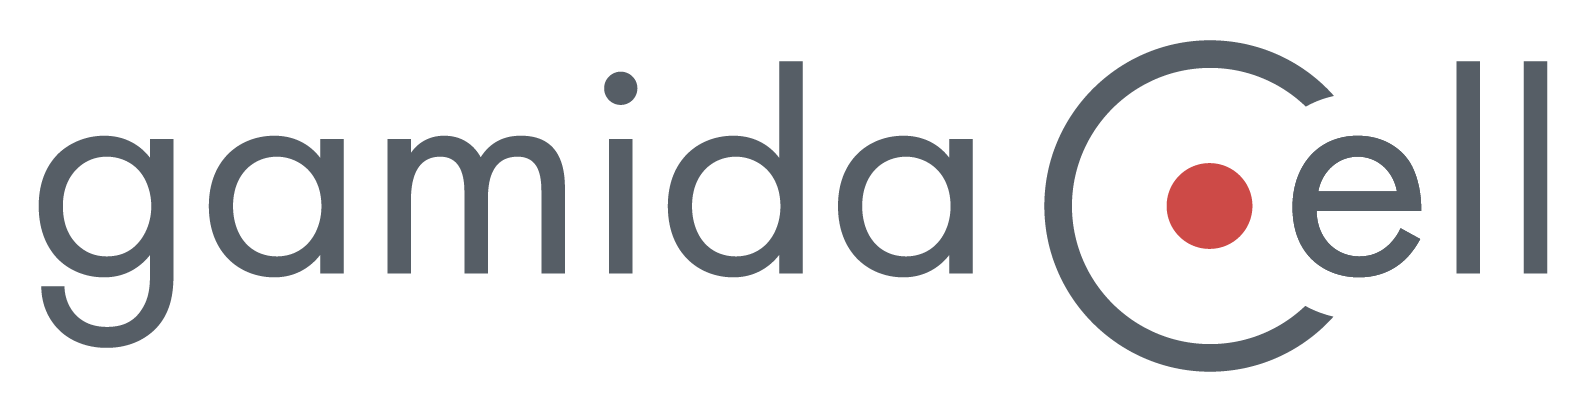 Gamida Cell Logo